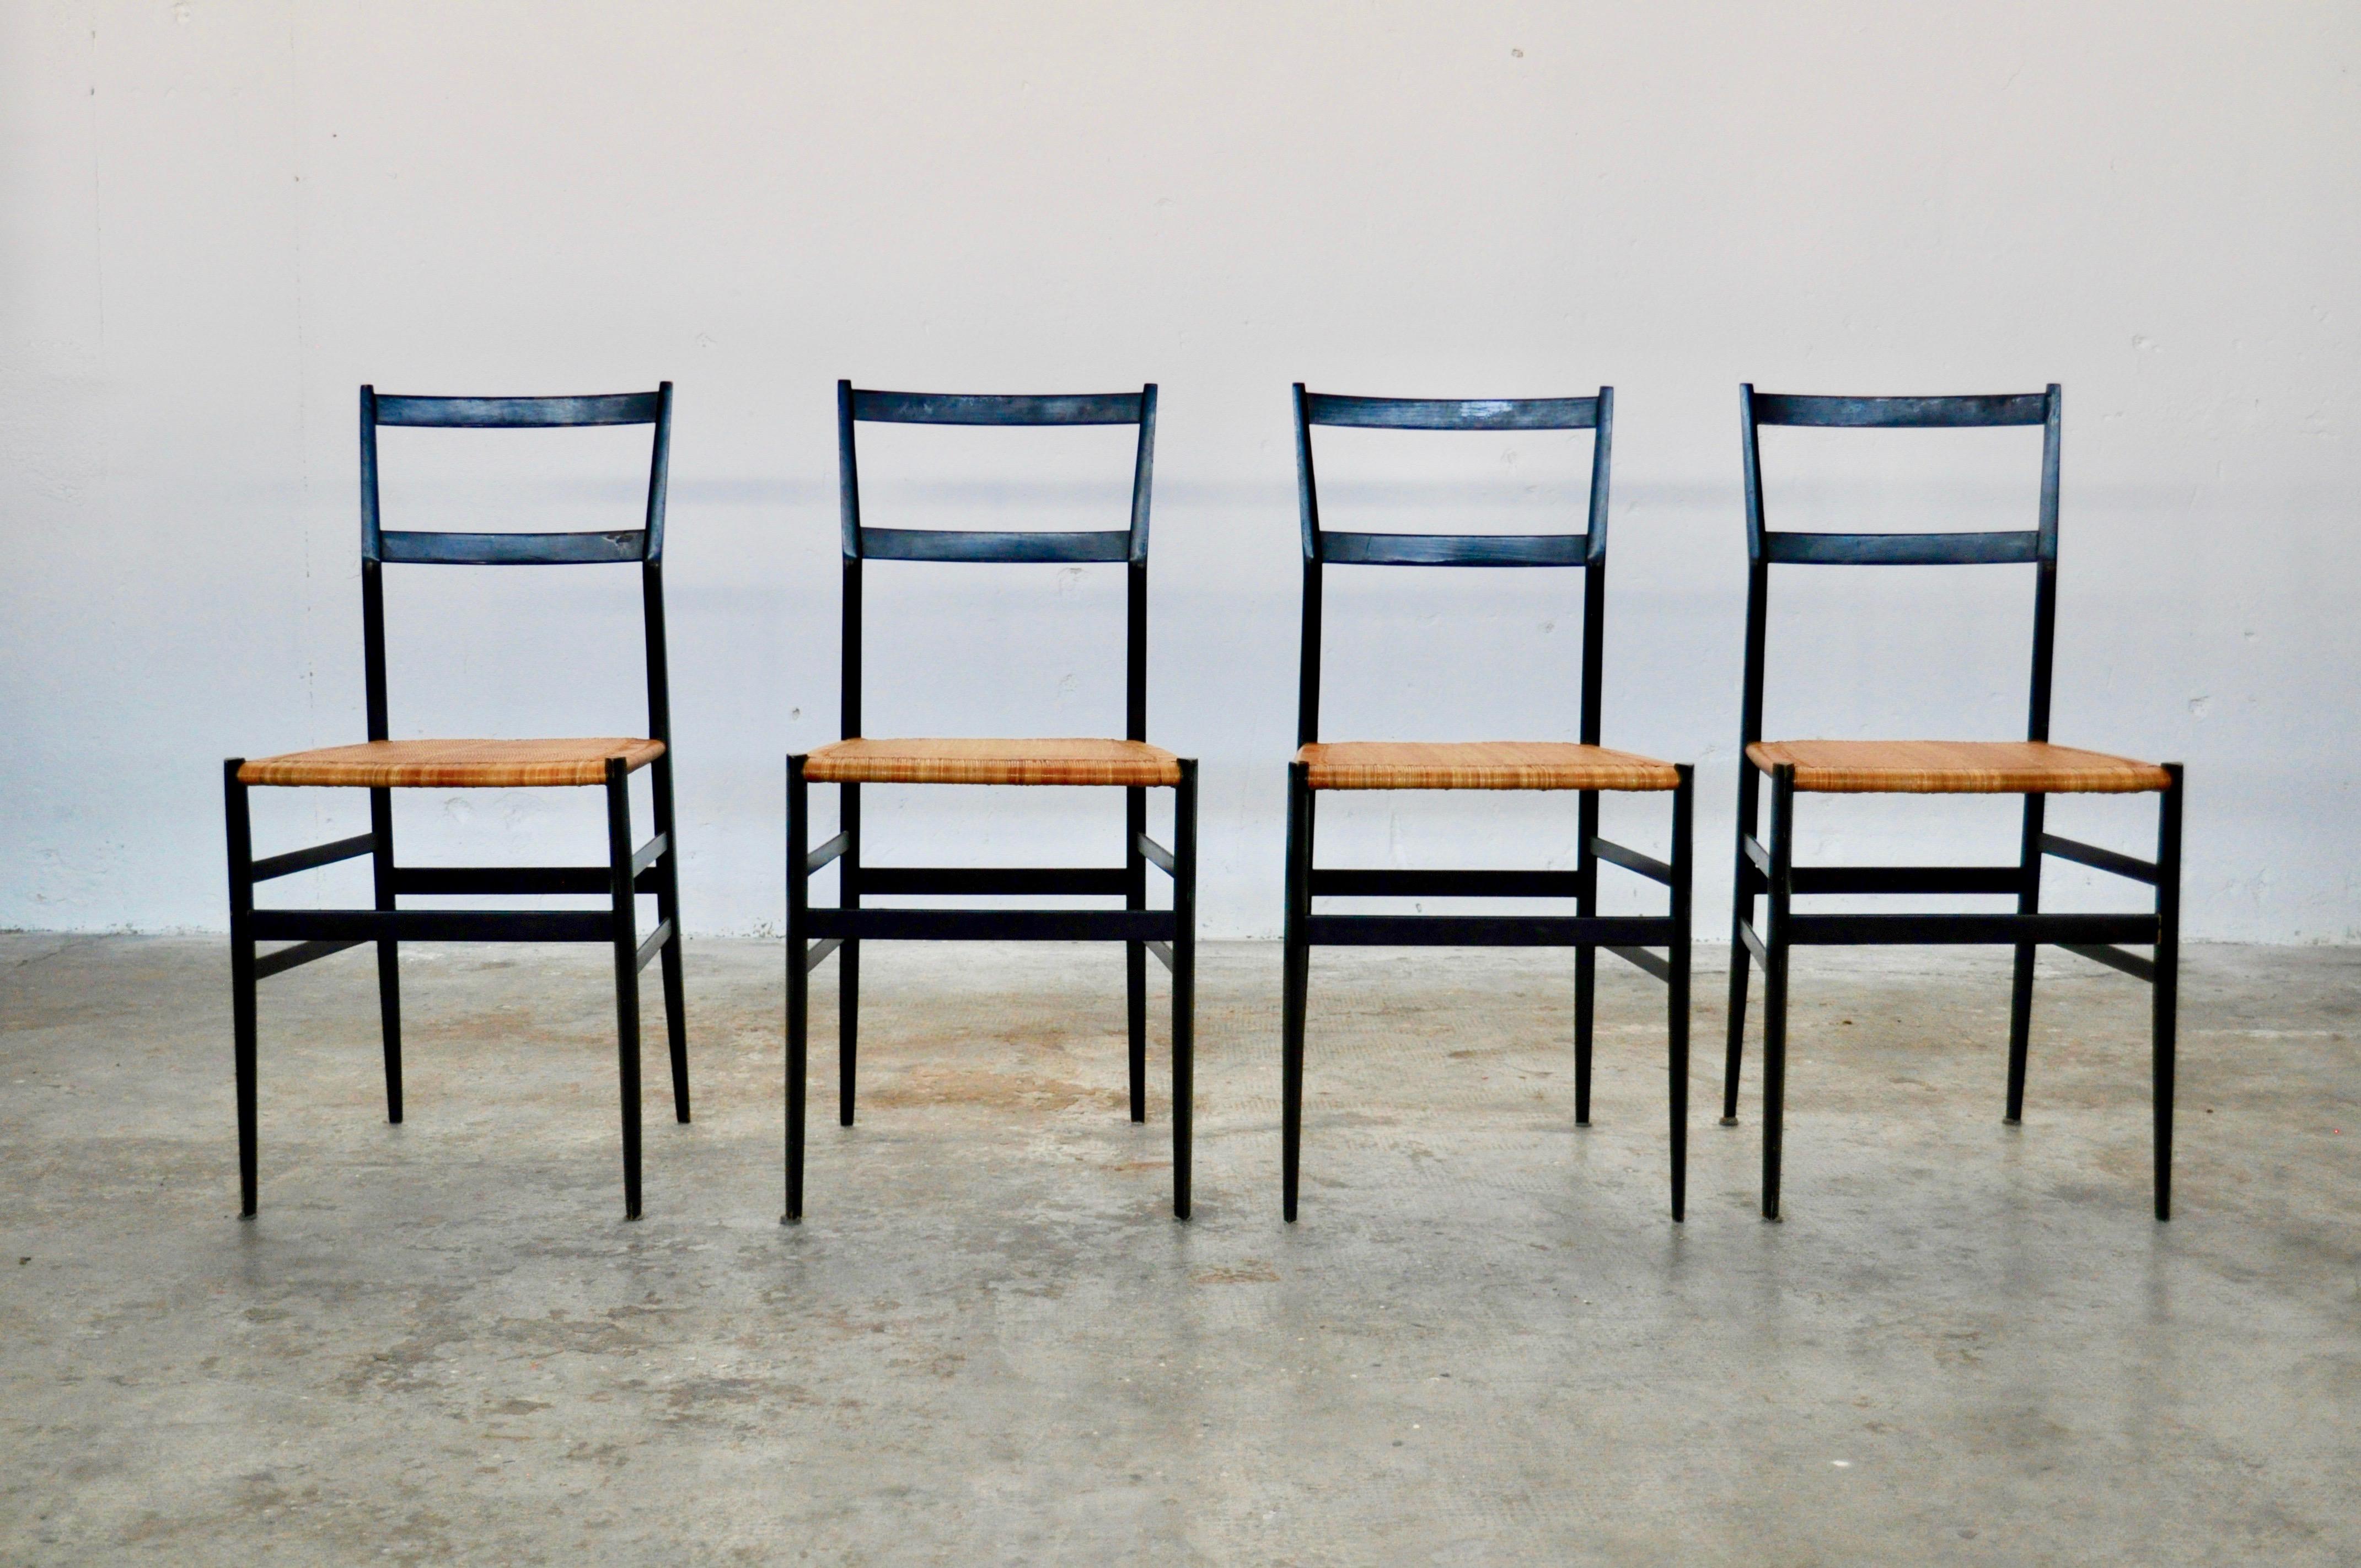 Set Superleggera chairs by Gio Ponti for Cassina, 1957. Ash strurture wood. Seat in handwoven wicker straw.